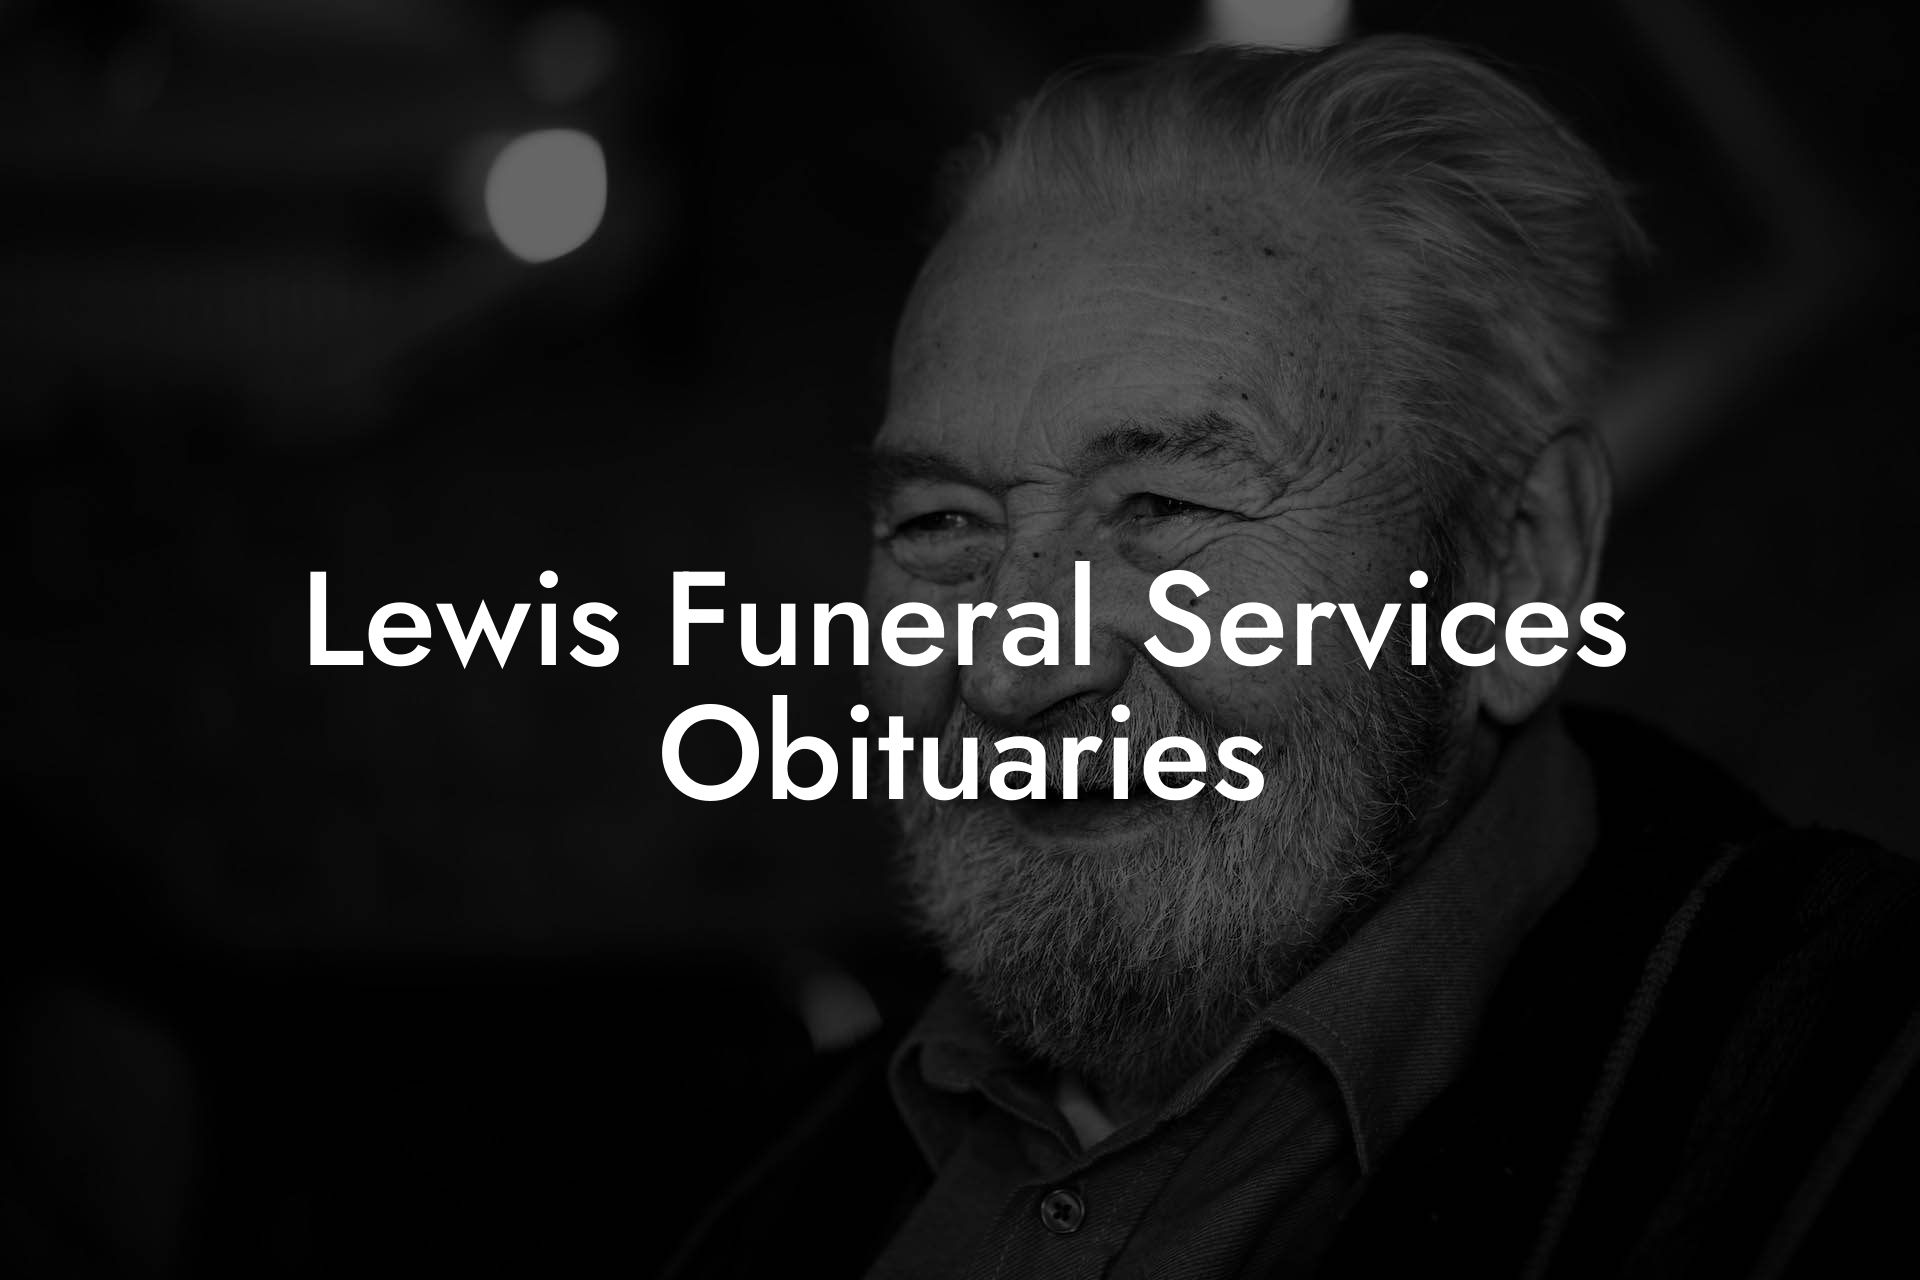 Lewis Funeral Services Obituaries